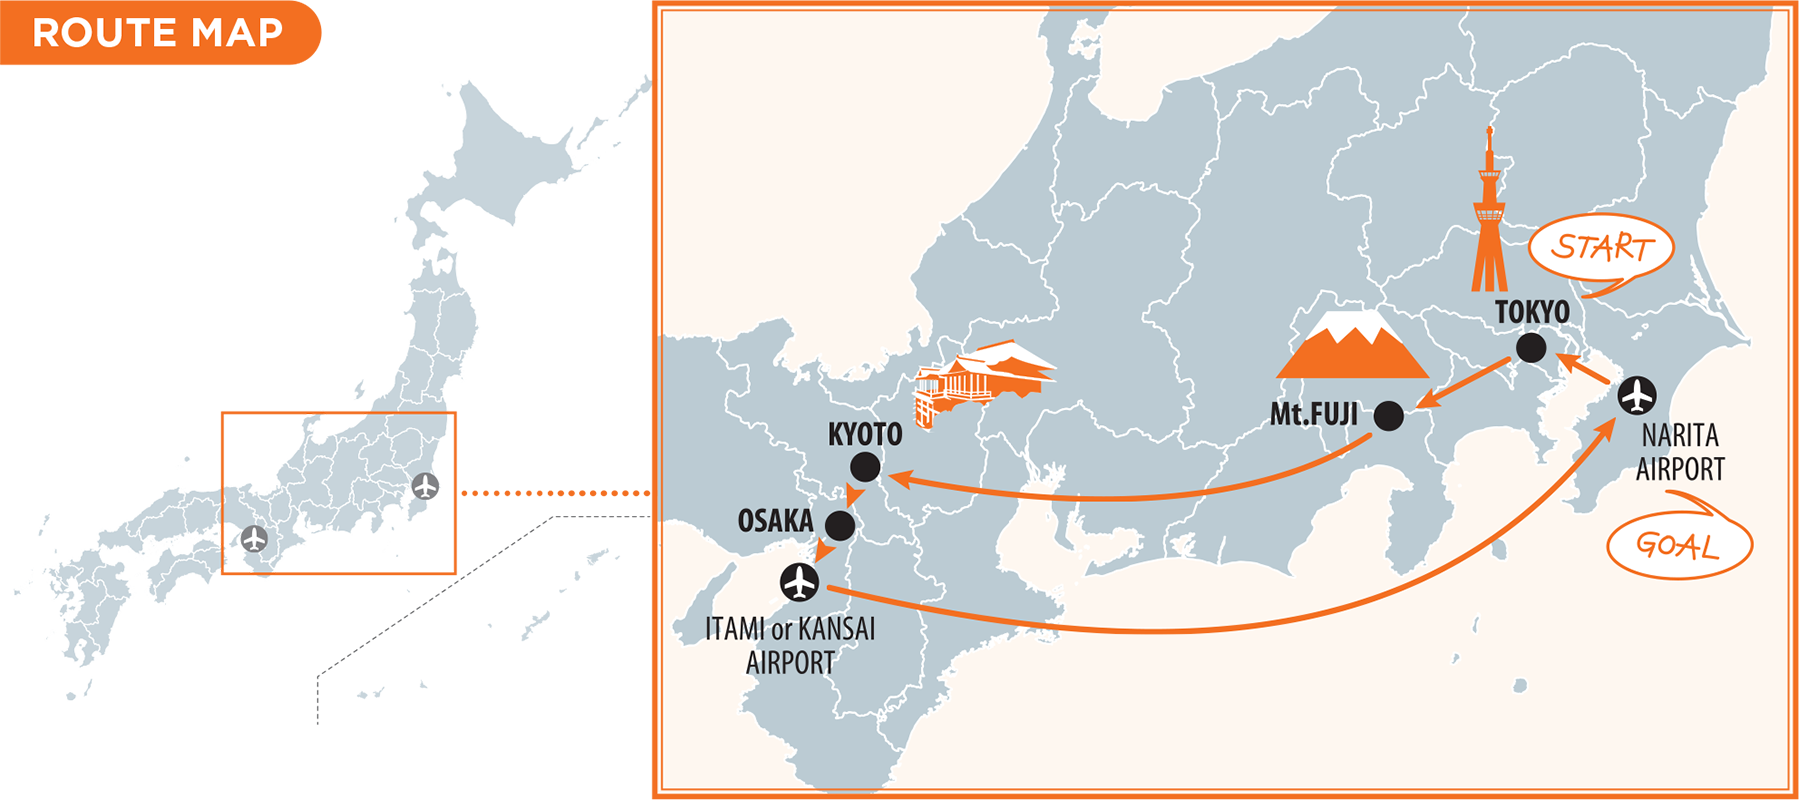 Japan's New Golden Route